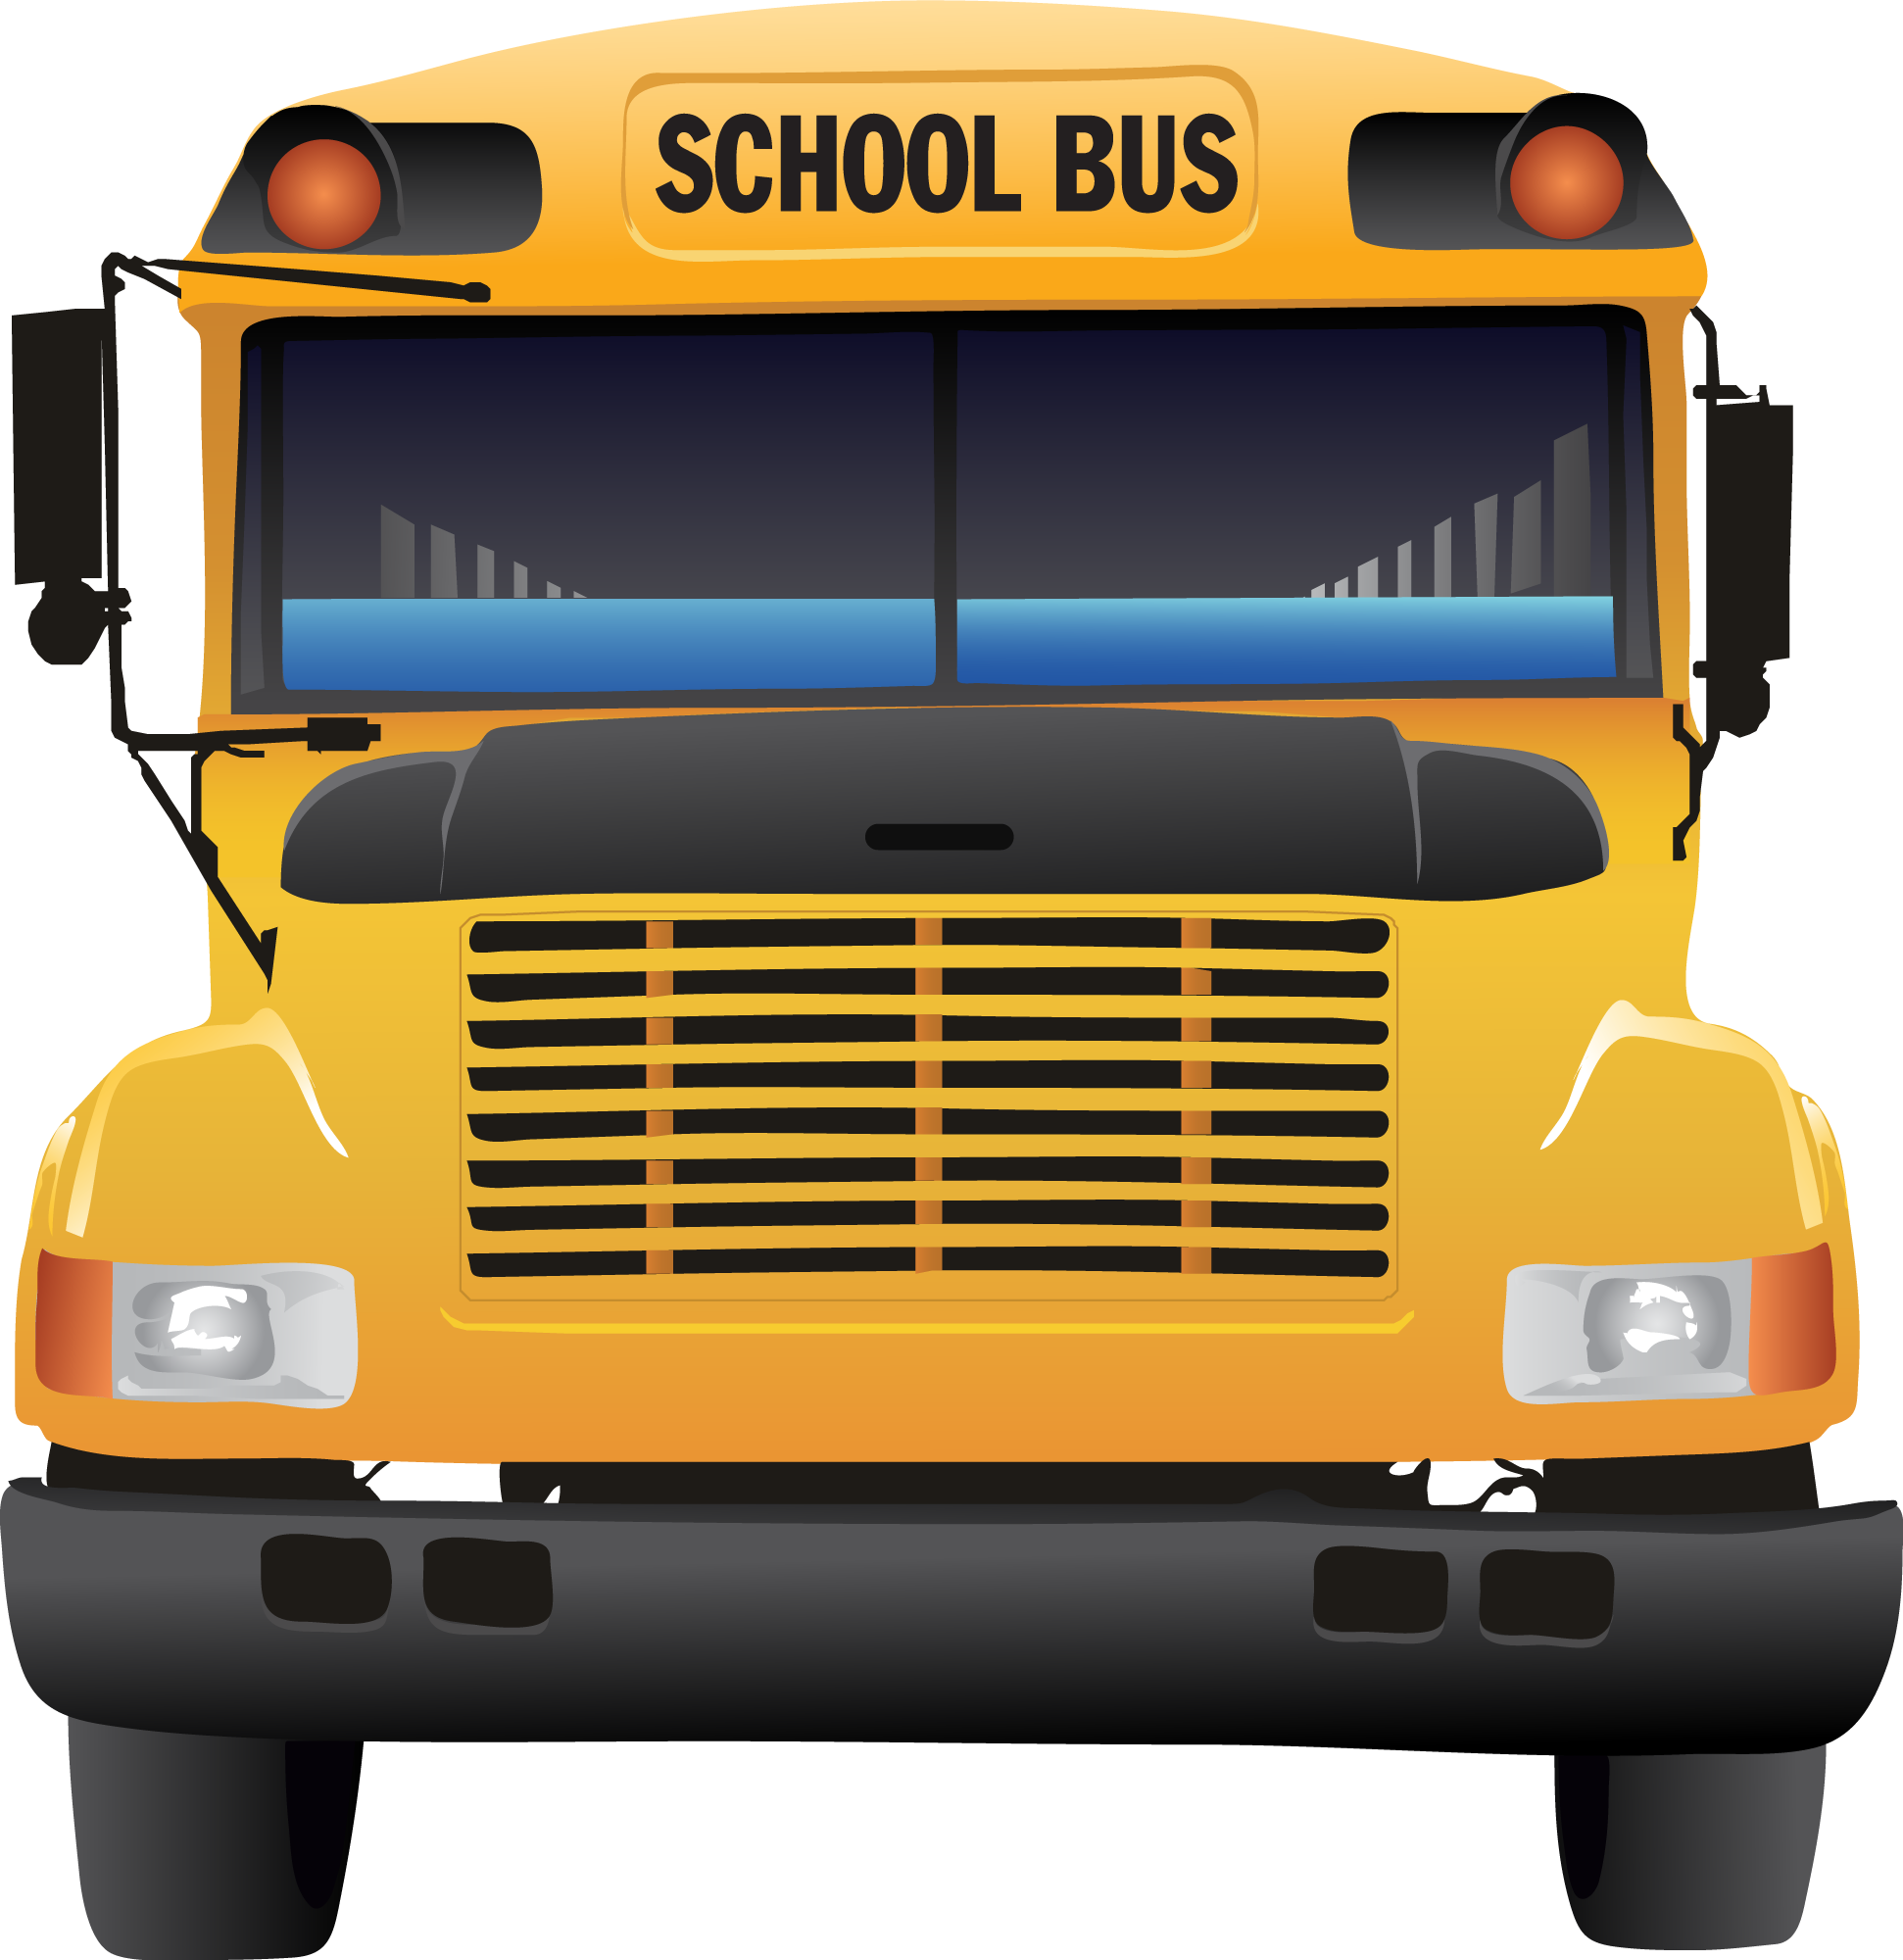 free clipart school bus - photo #9